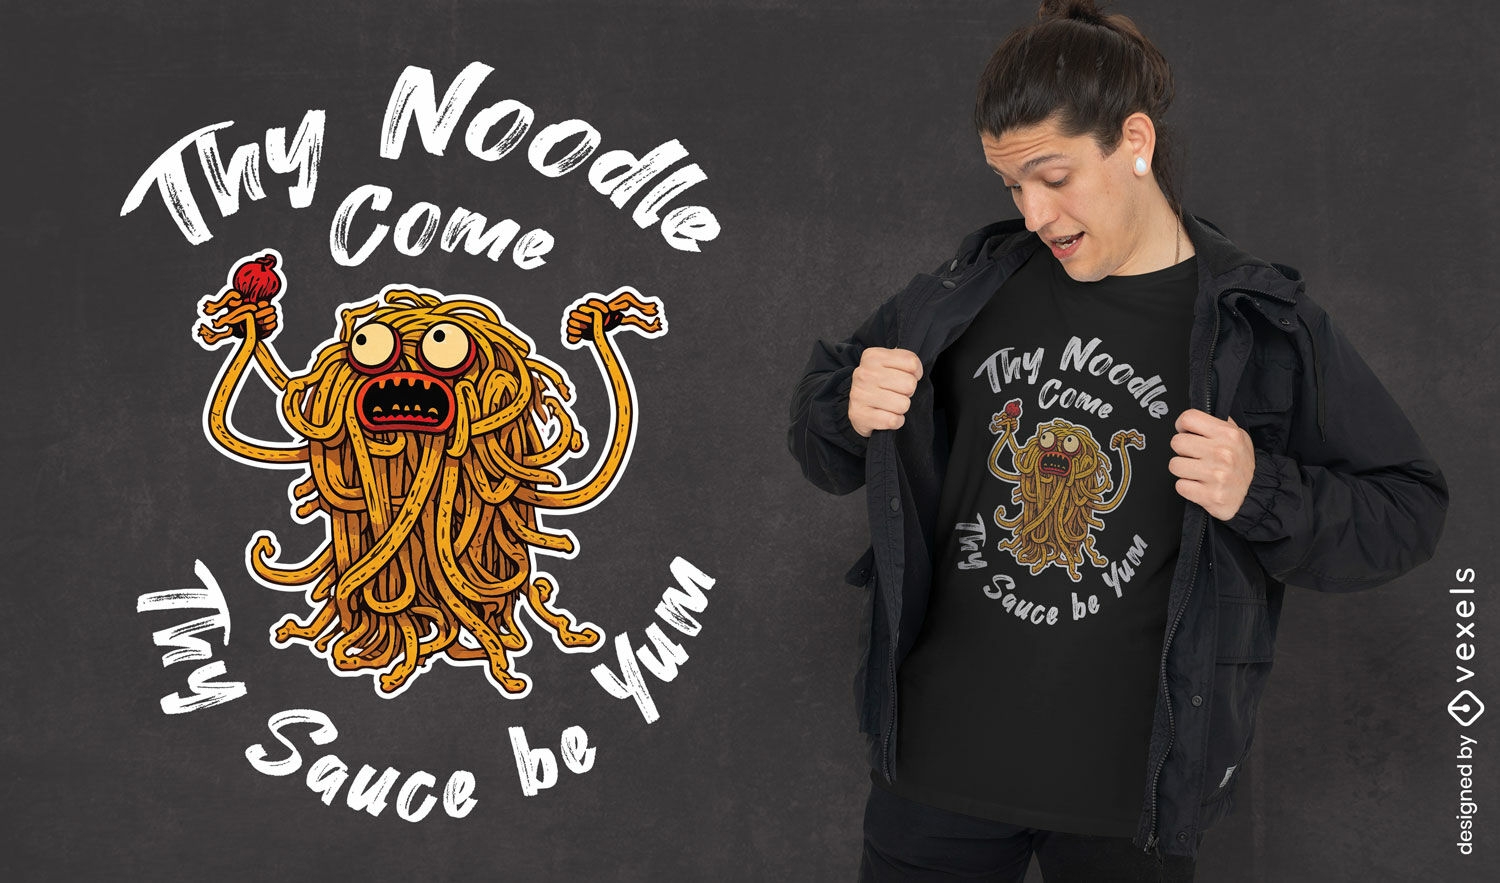 Spaghetti monster quote t-shirt design